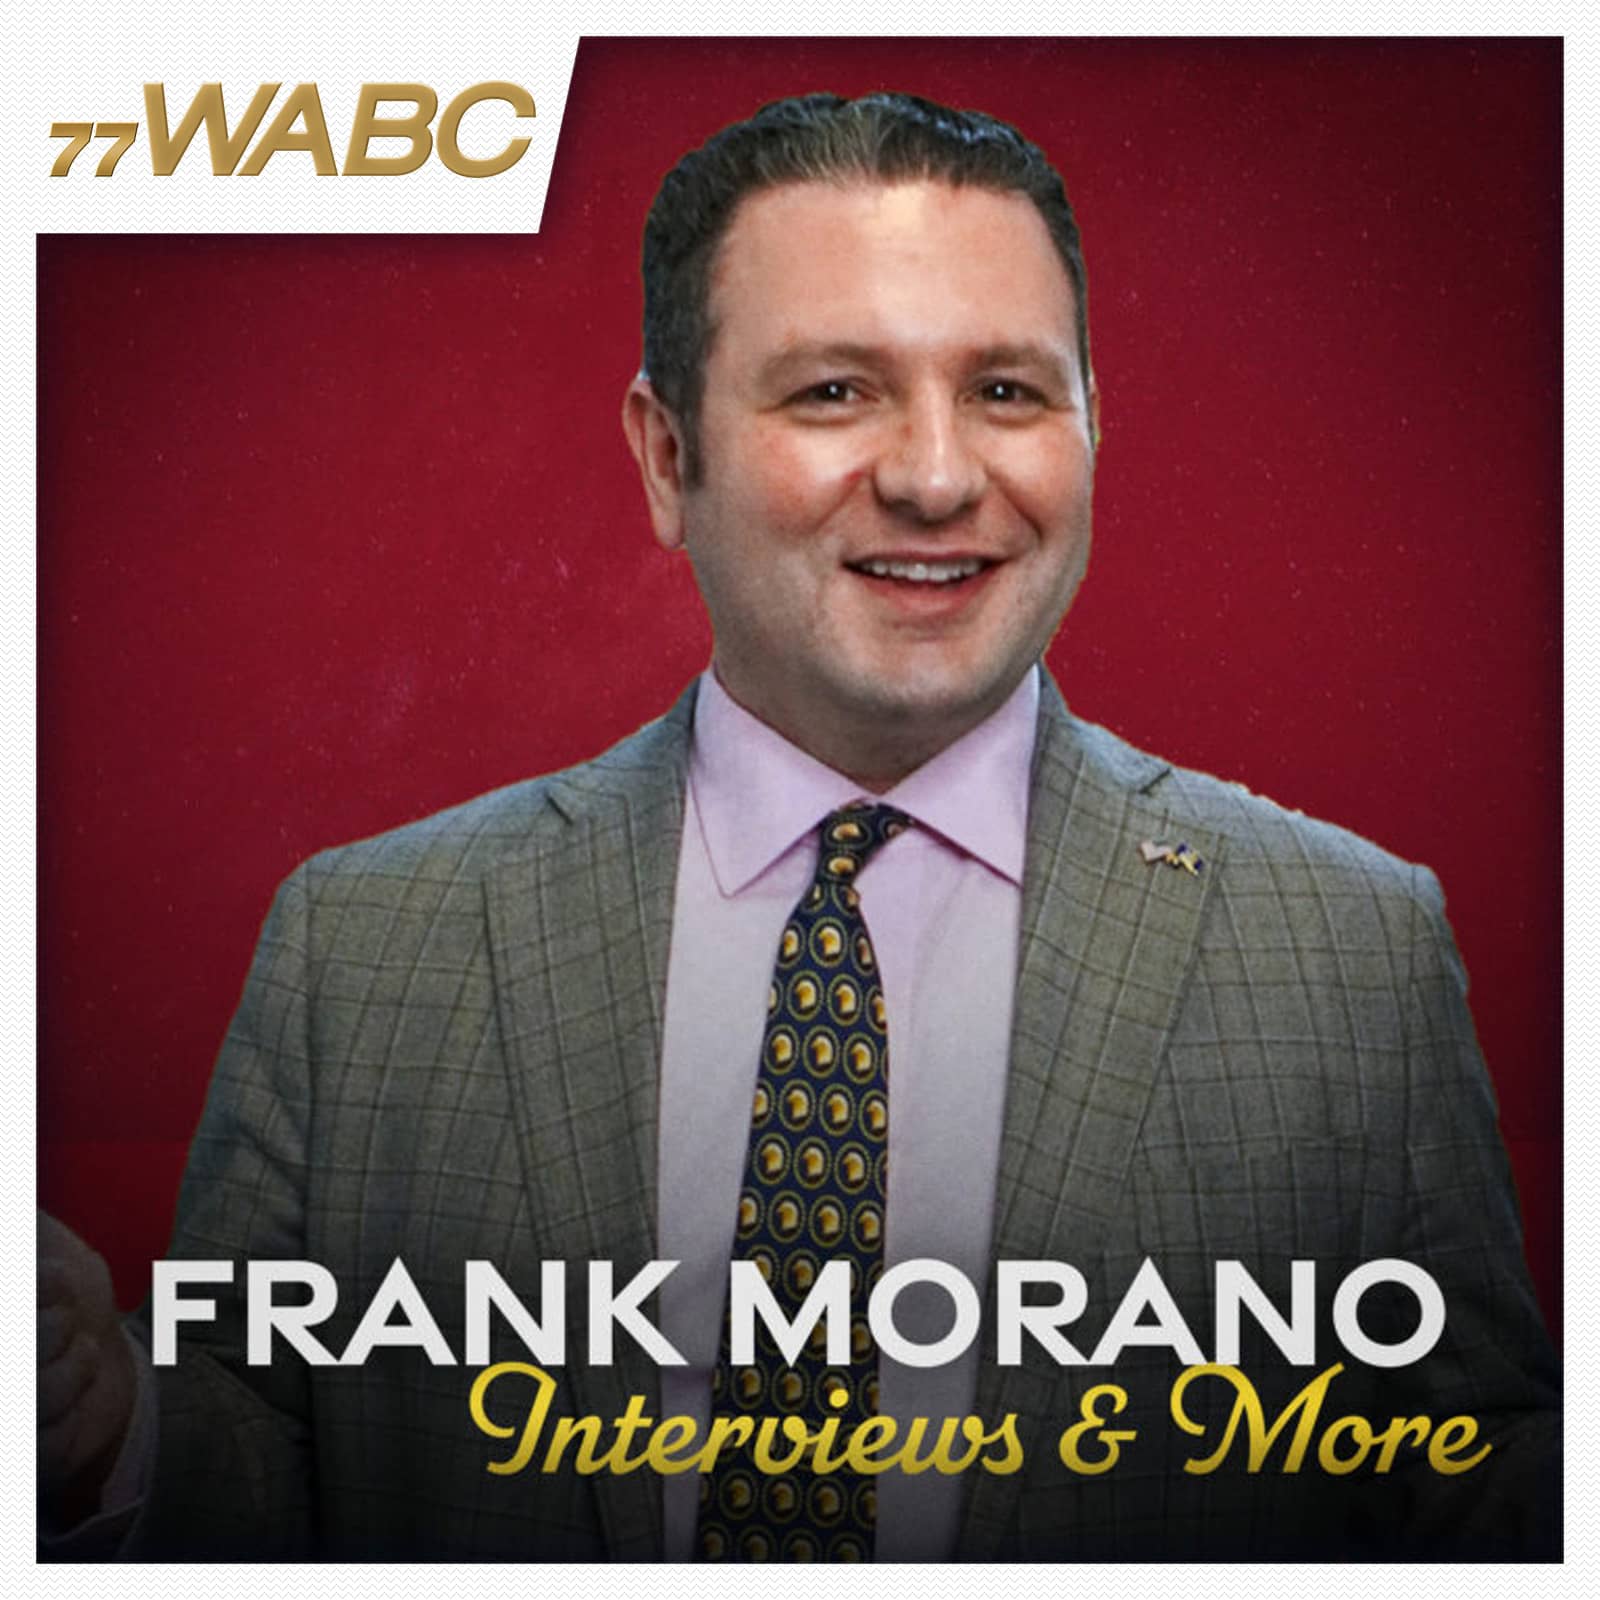 frank-morano-interviews-and-more-podcast-new-logo472623